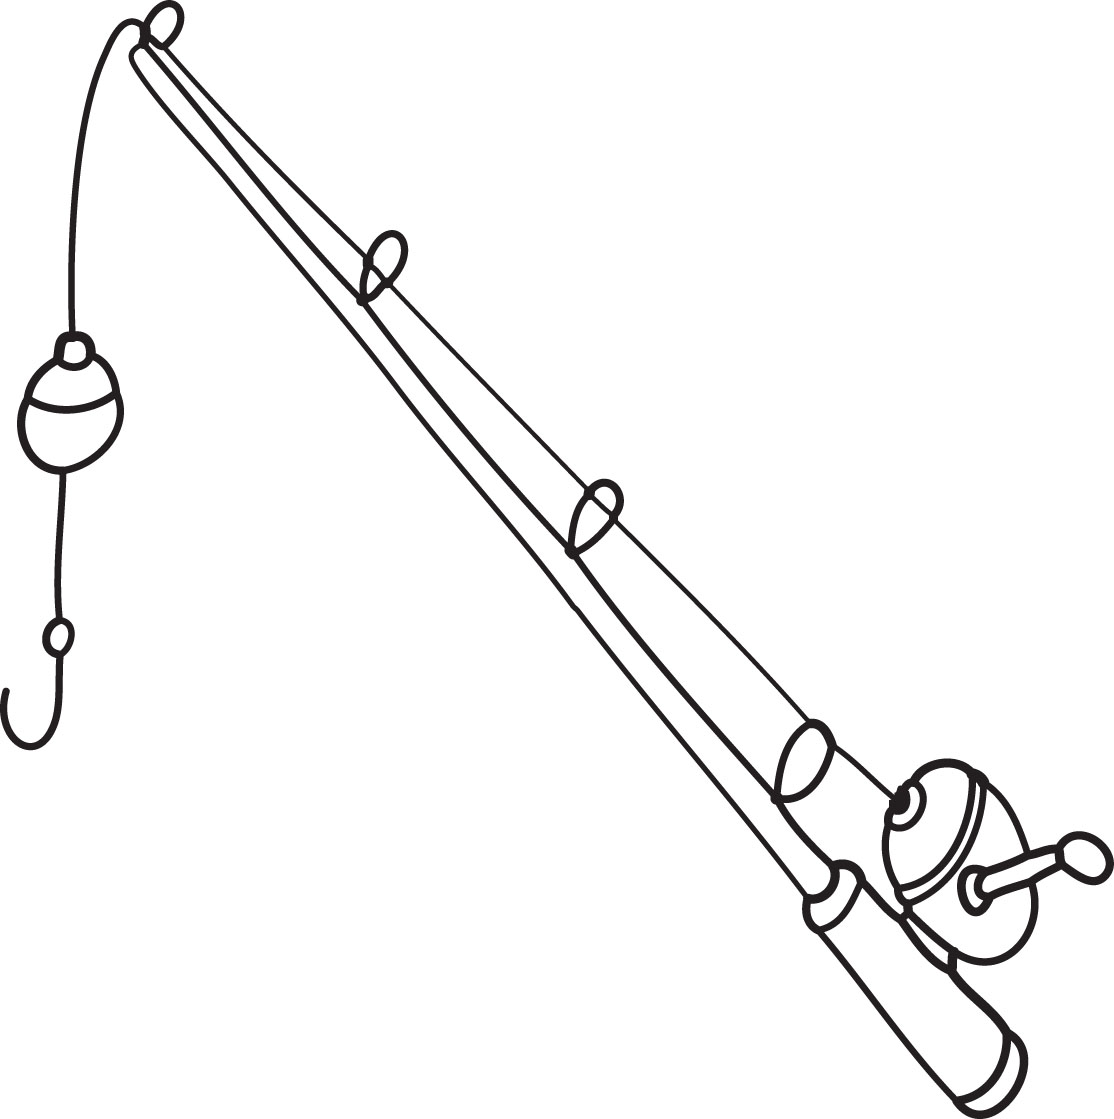 Cartoon Fishing Rod - ClipArt Best